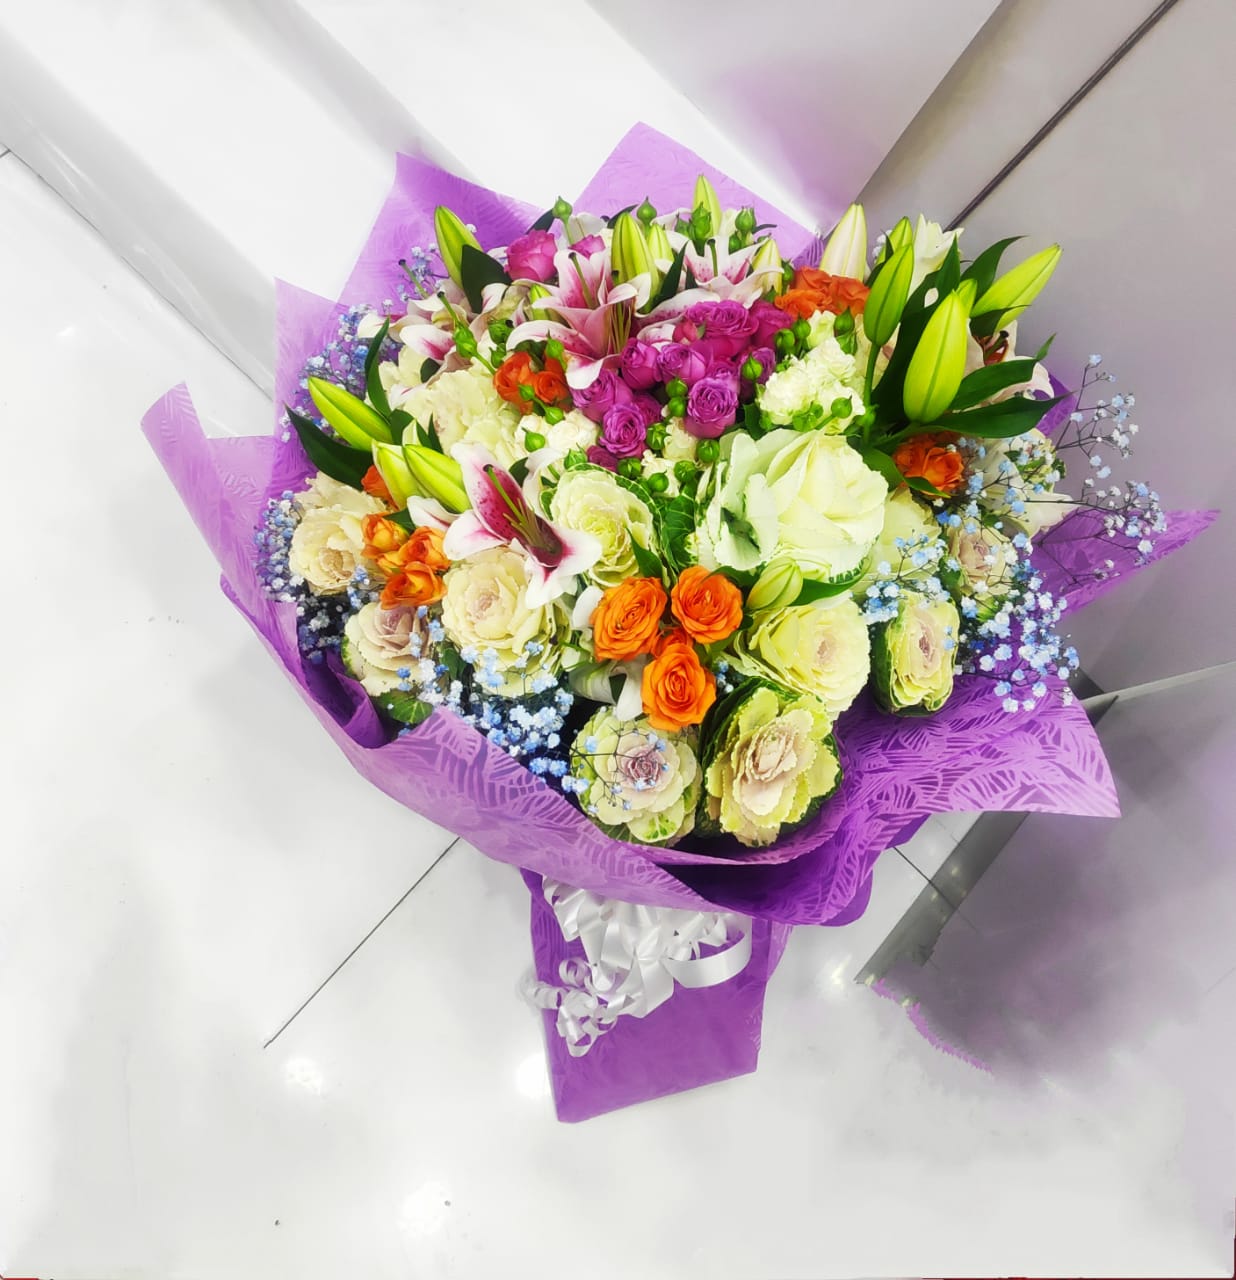 Flower Delivery Dubai